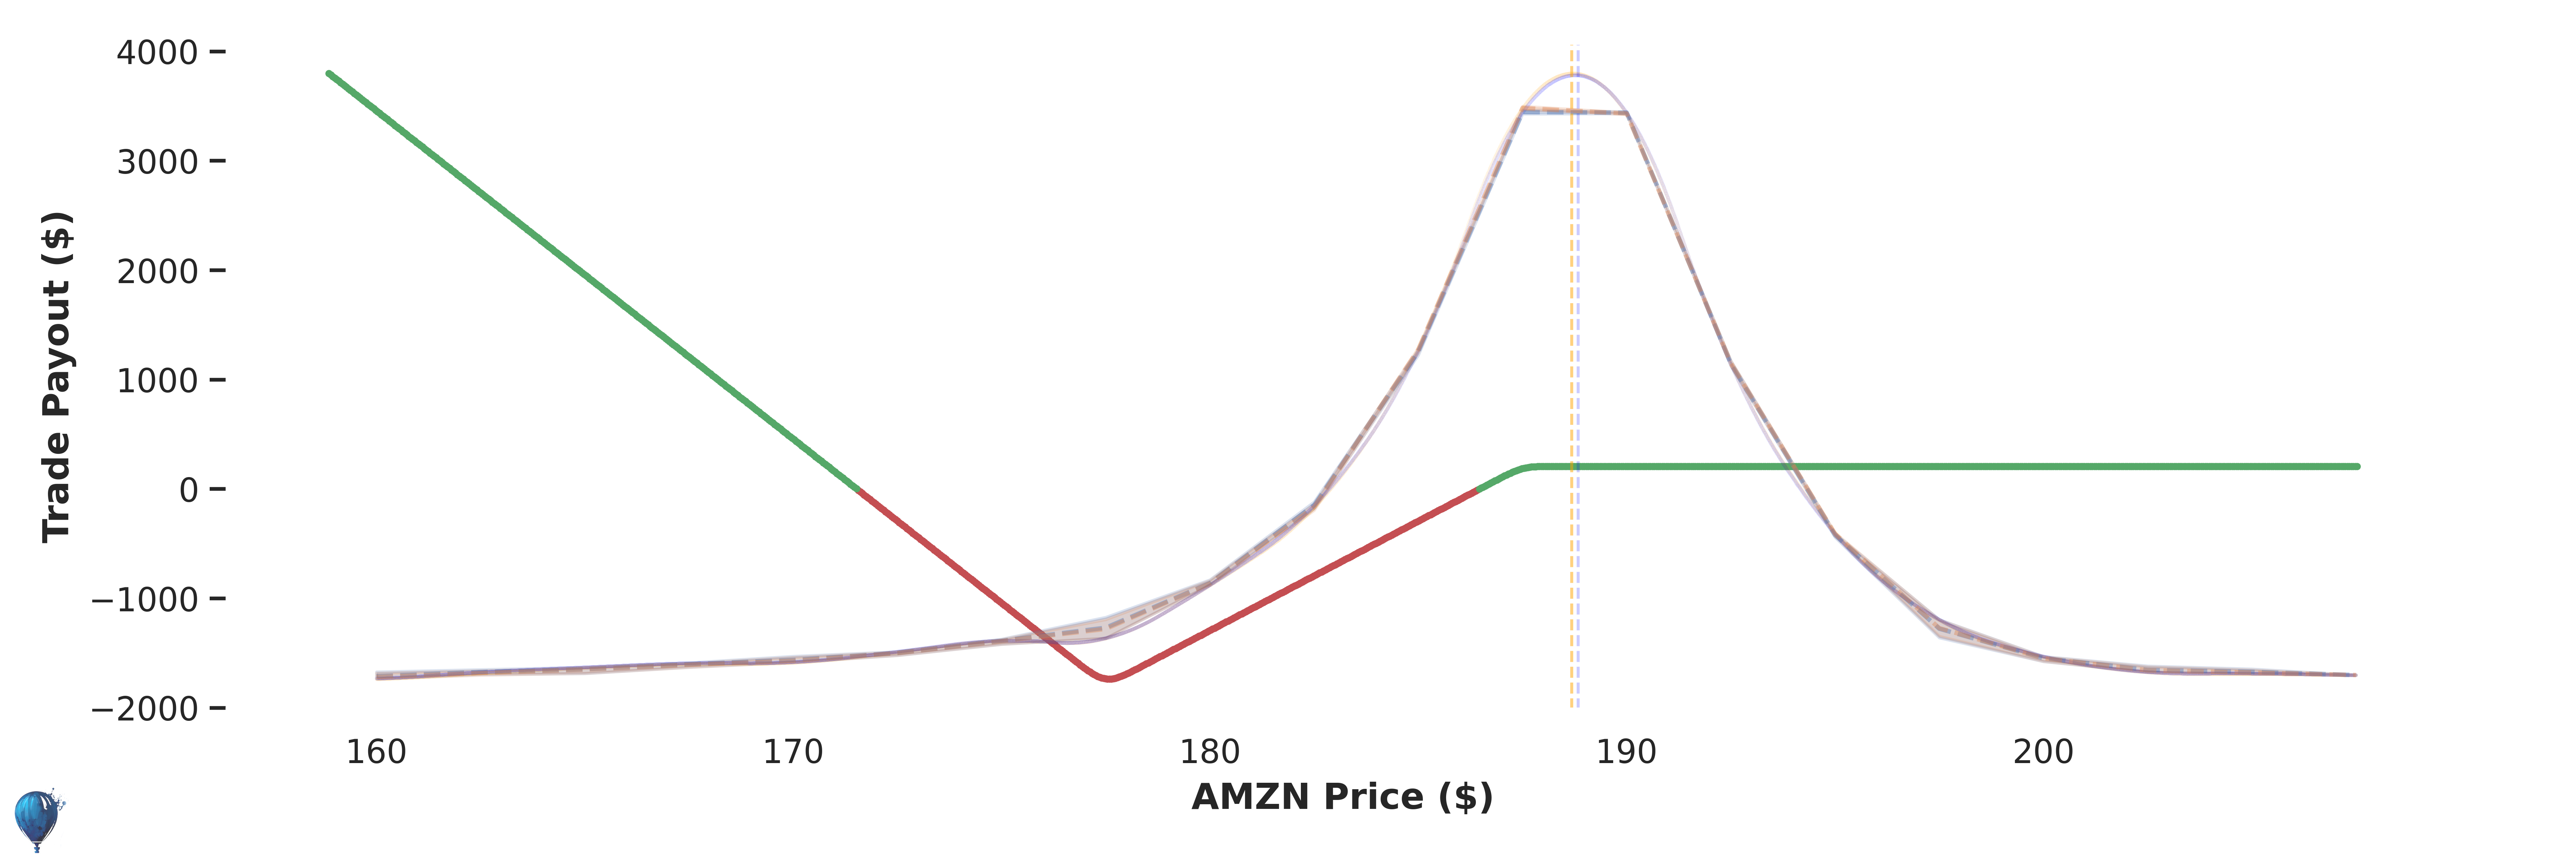 AMZN trade payout at expiration